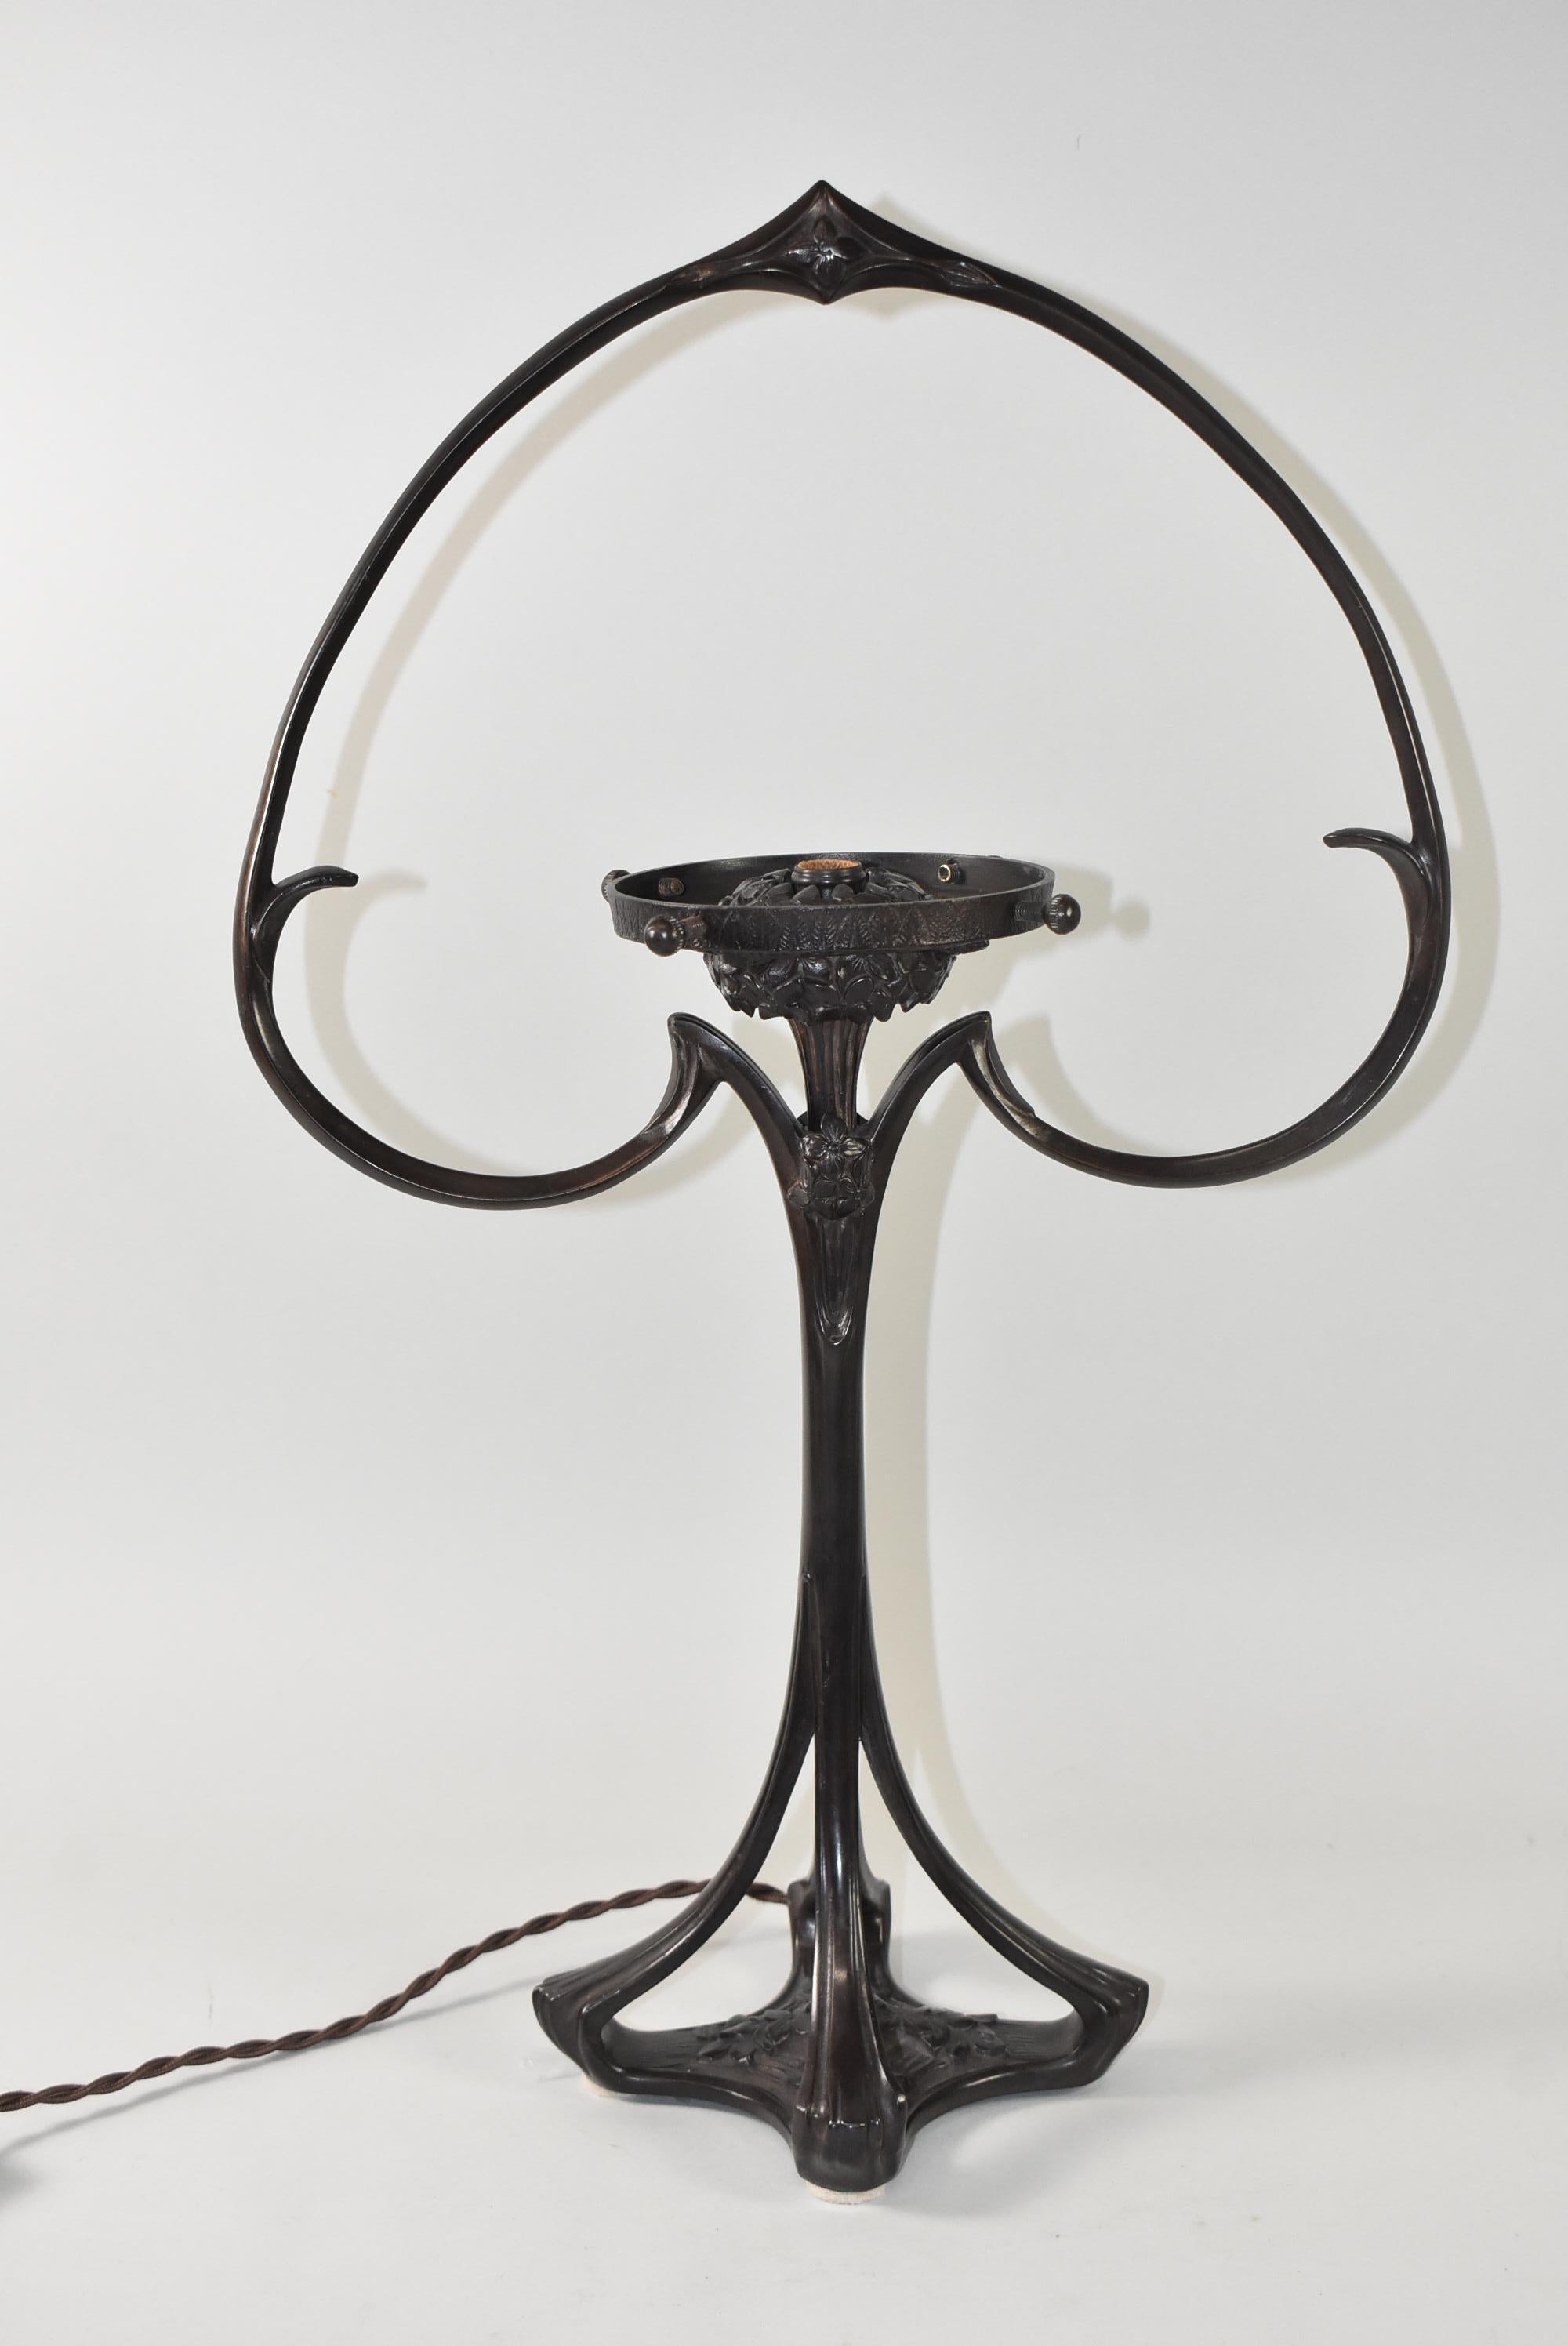 Bronze Art Nouveau Table Lamp with Daum Nancy Shade, Circa 1900 France For Sale